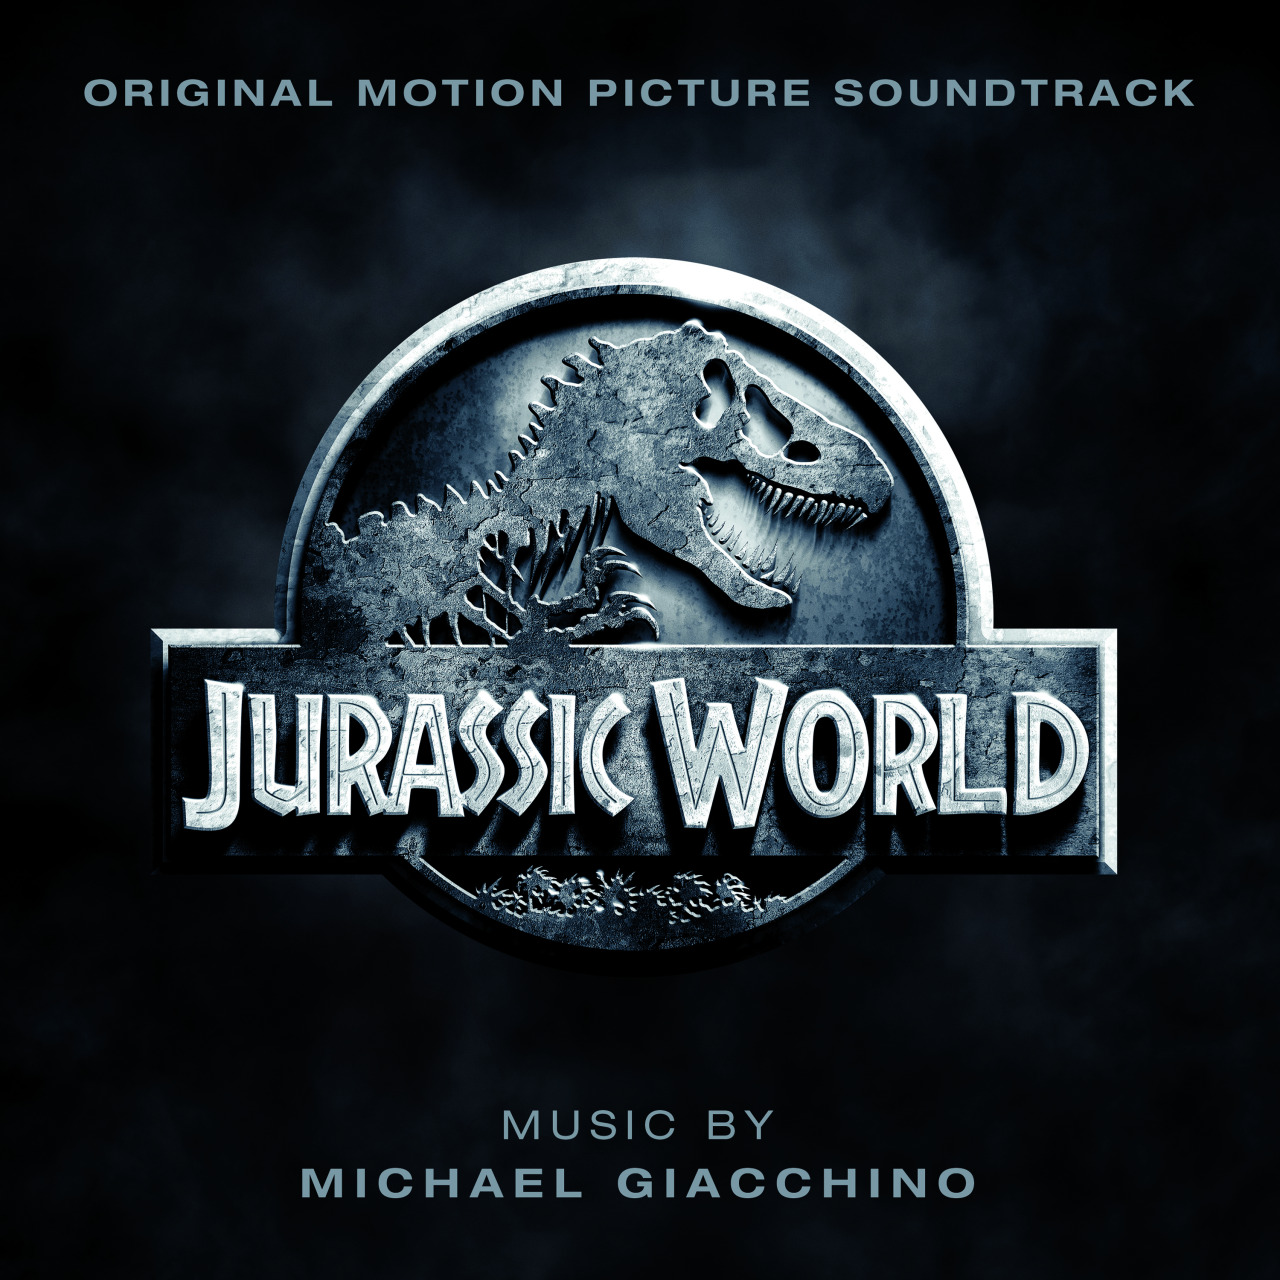 Jurassic World - Own it on Blu-ray Oct 20